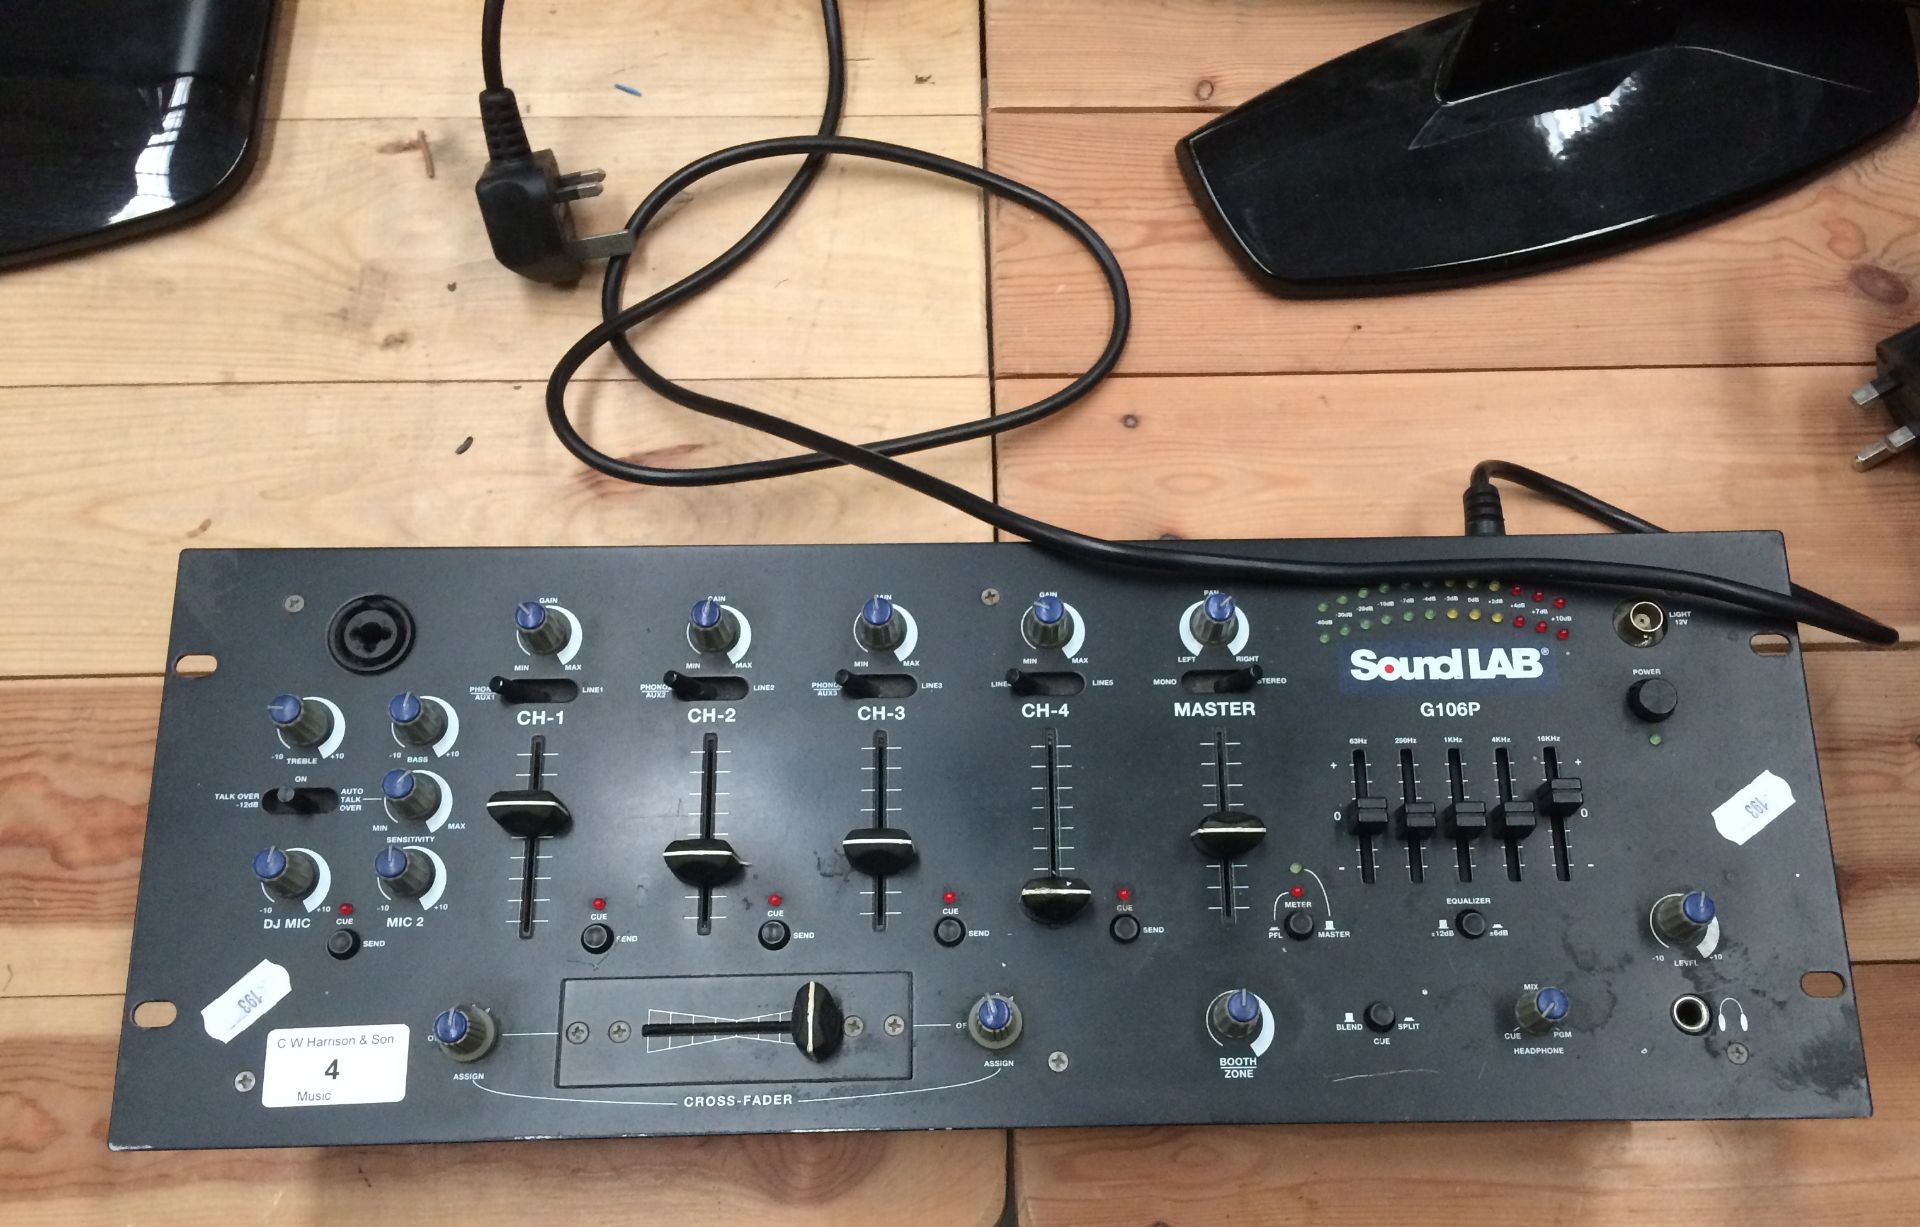 Sound Lab G106P professional mixer